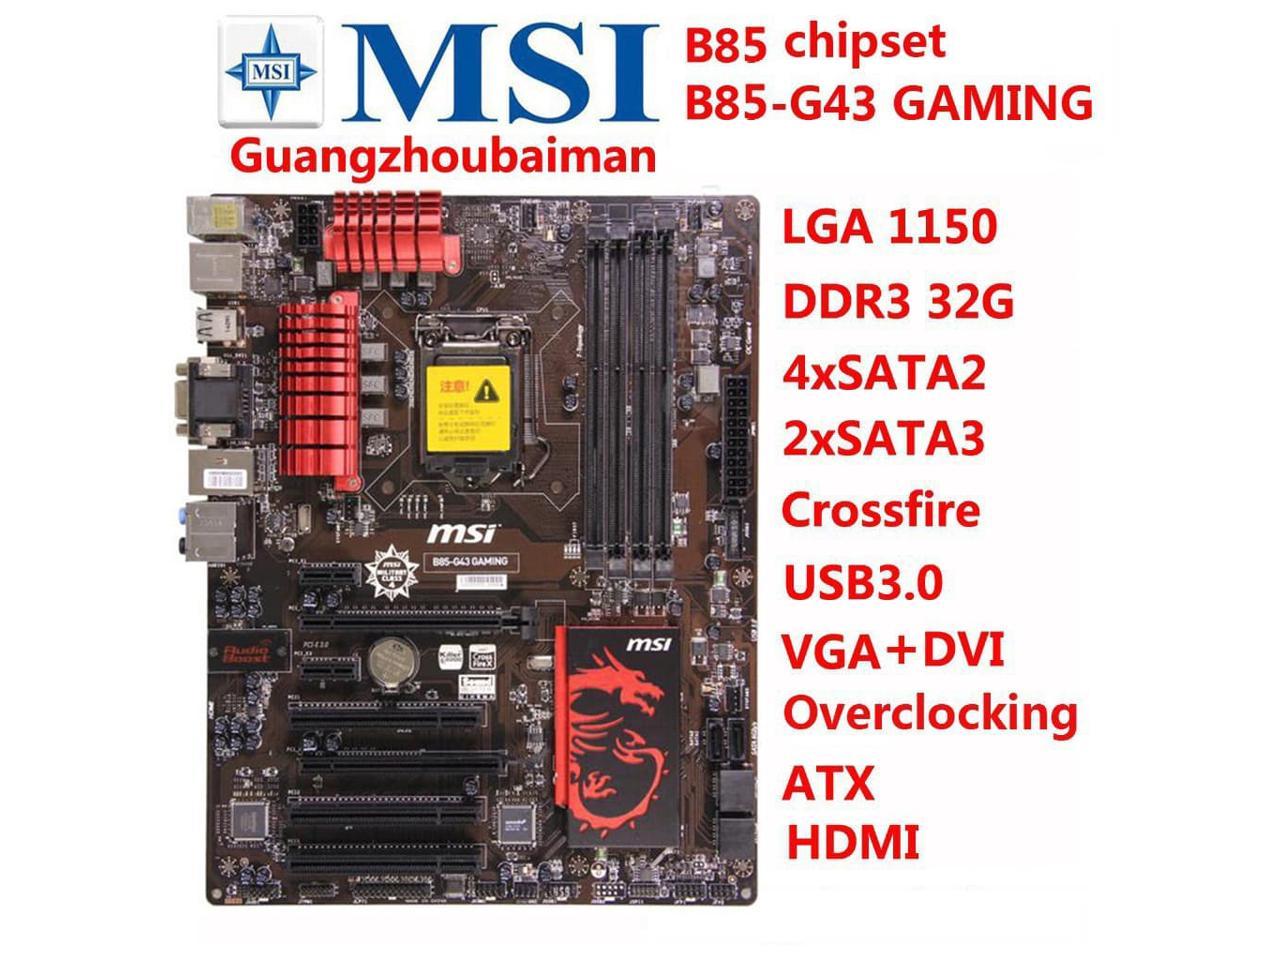 Msi g43 gaming